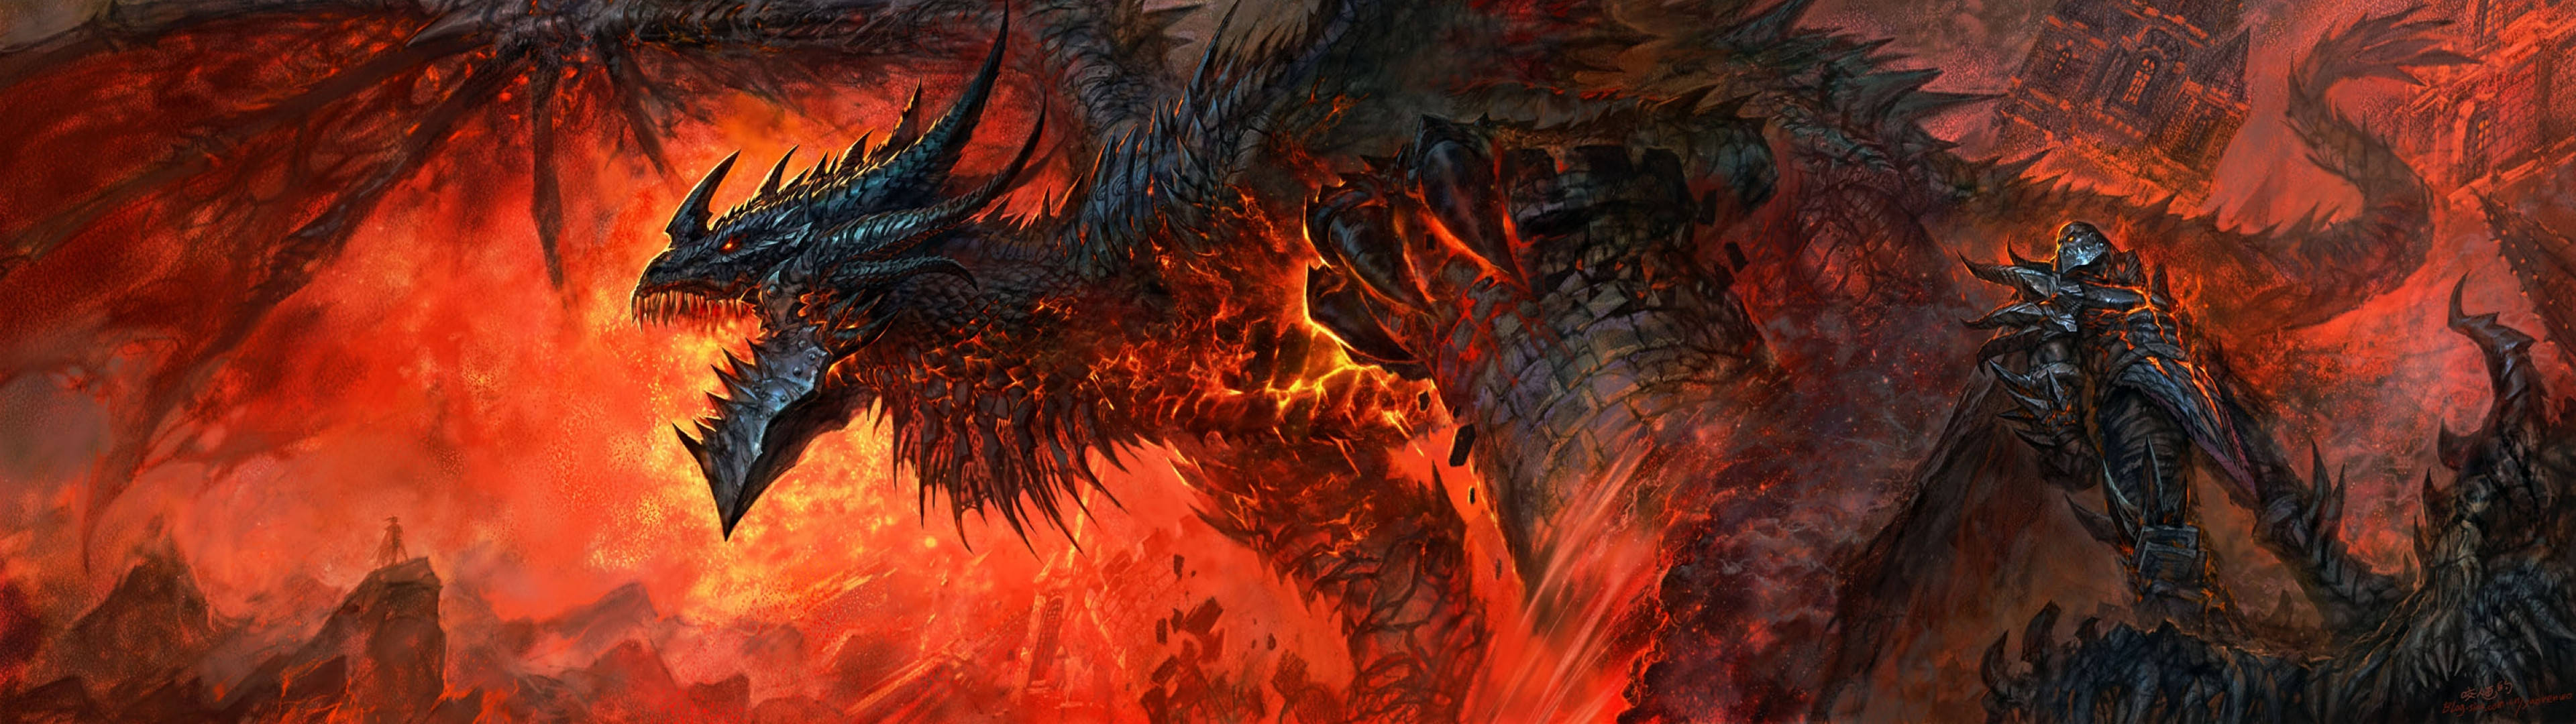 Deathwing World Of Warcraft Dragon 3840x1080